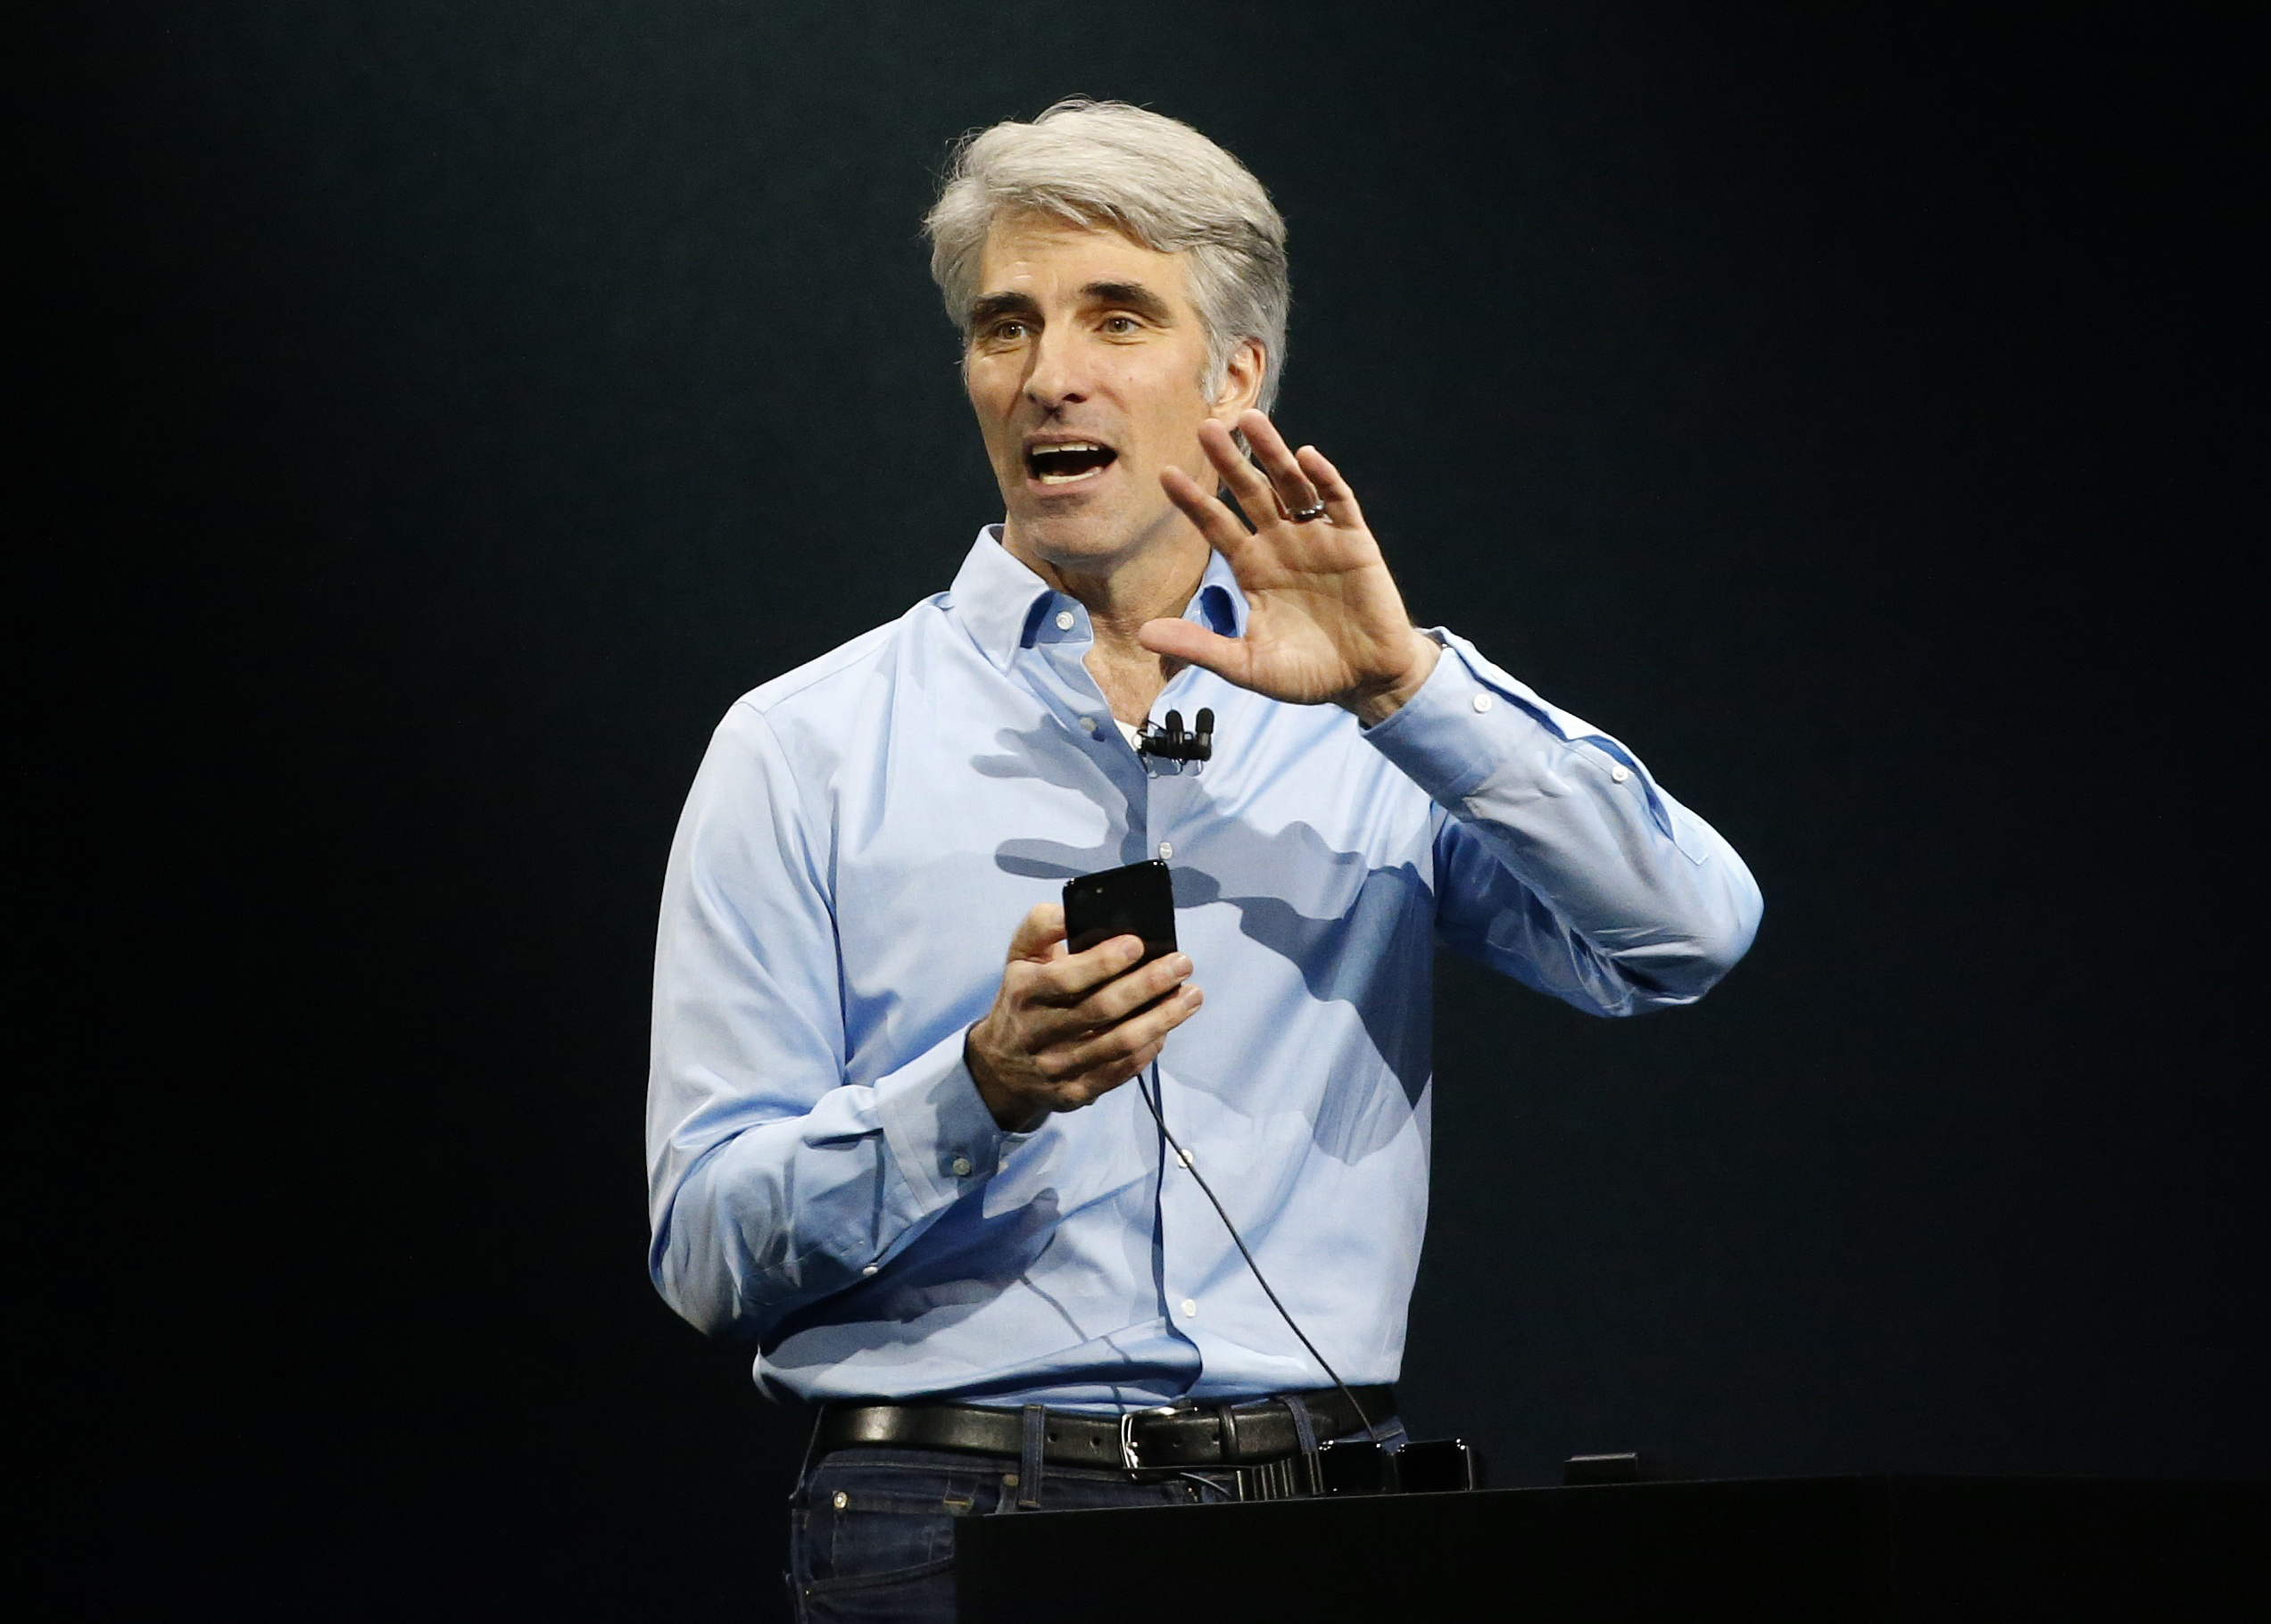 Craig Federighi, Senior Vice President Software Engineering speaks during Apple's annual world wide developer conference (WWDC) in San Jose, California, U.S. June 5, 2017. REUTERS/Stephen Lam